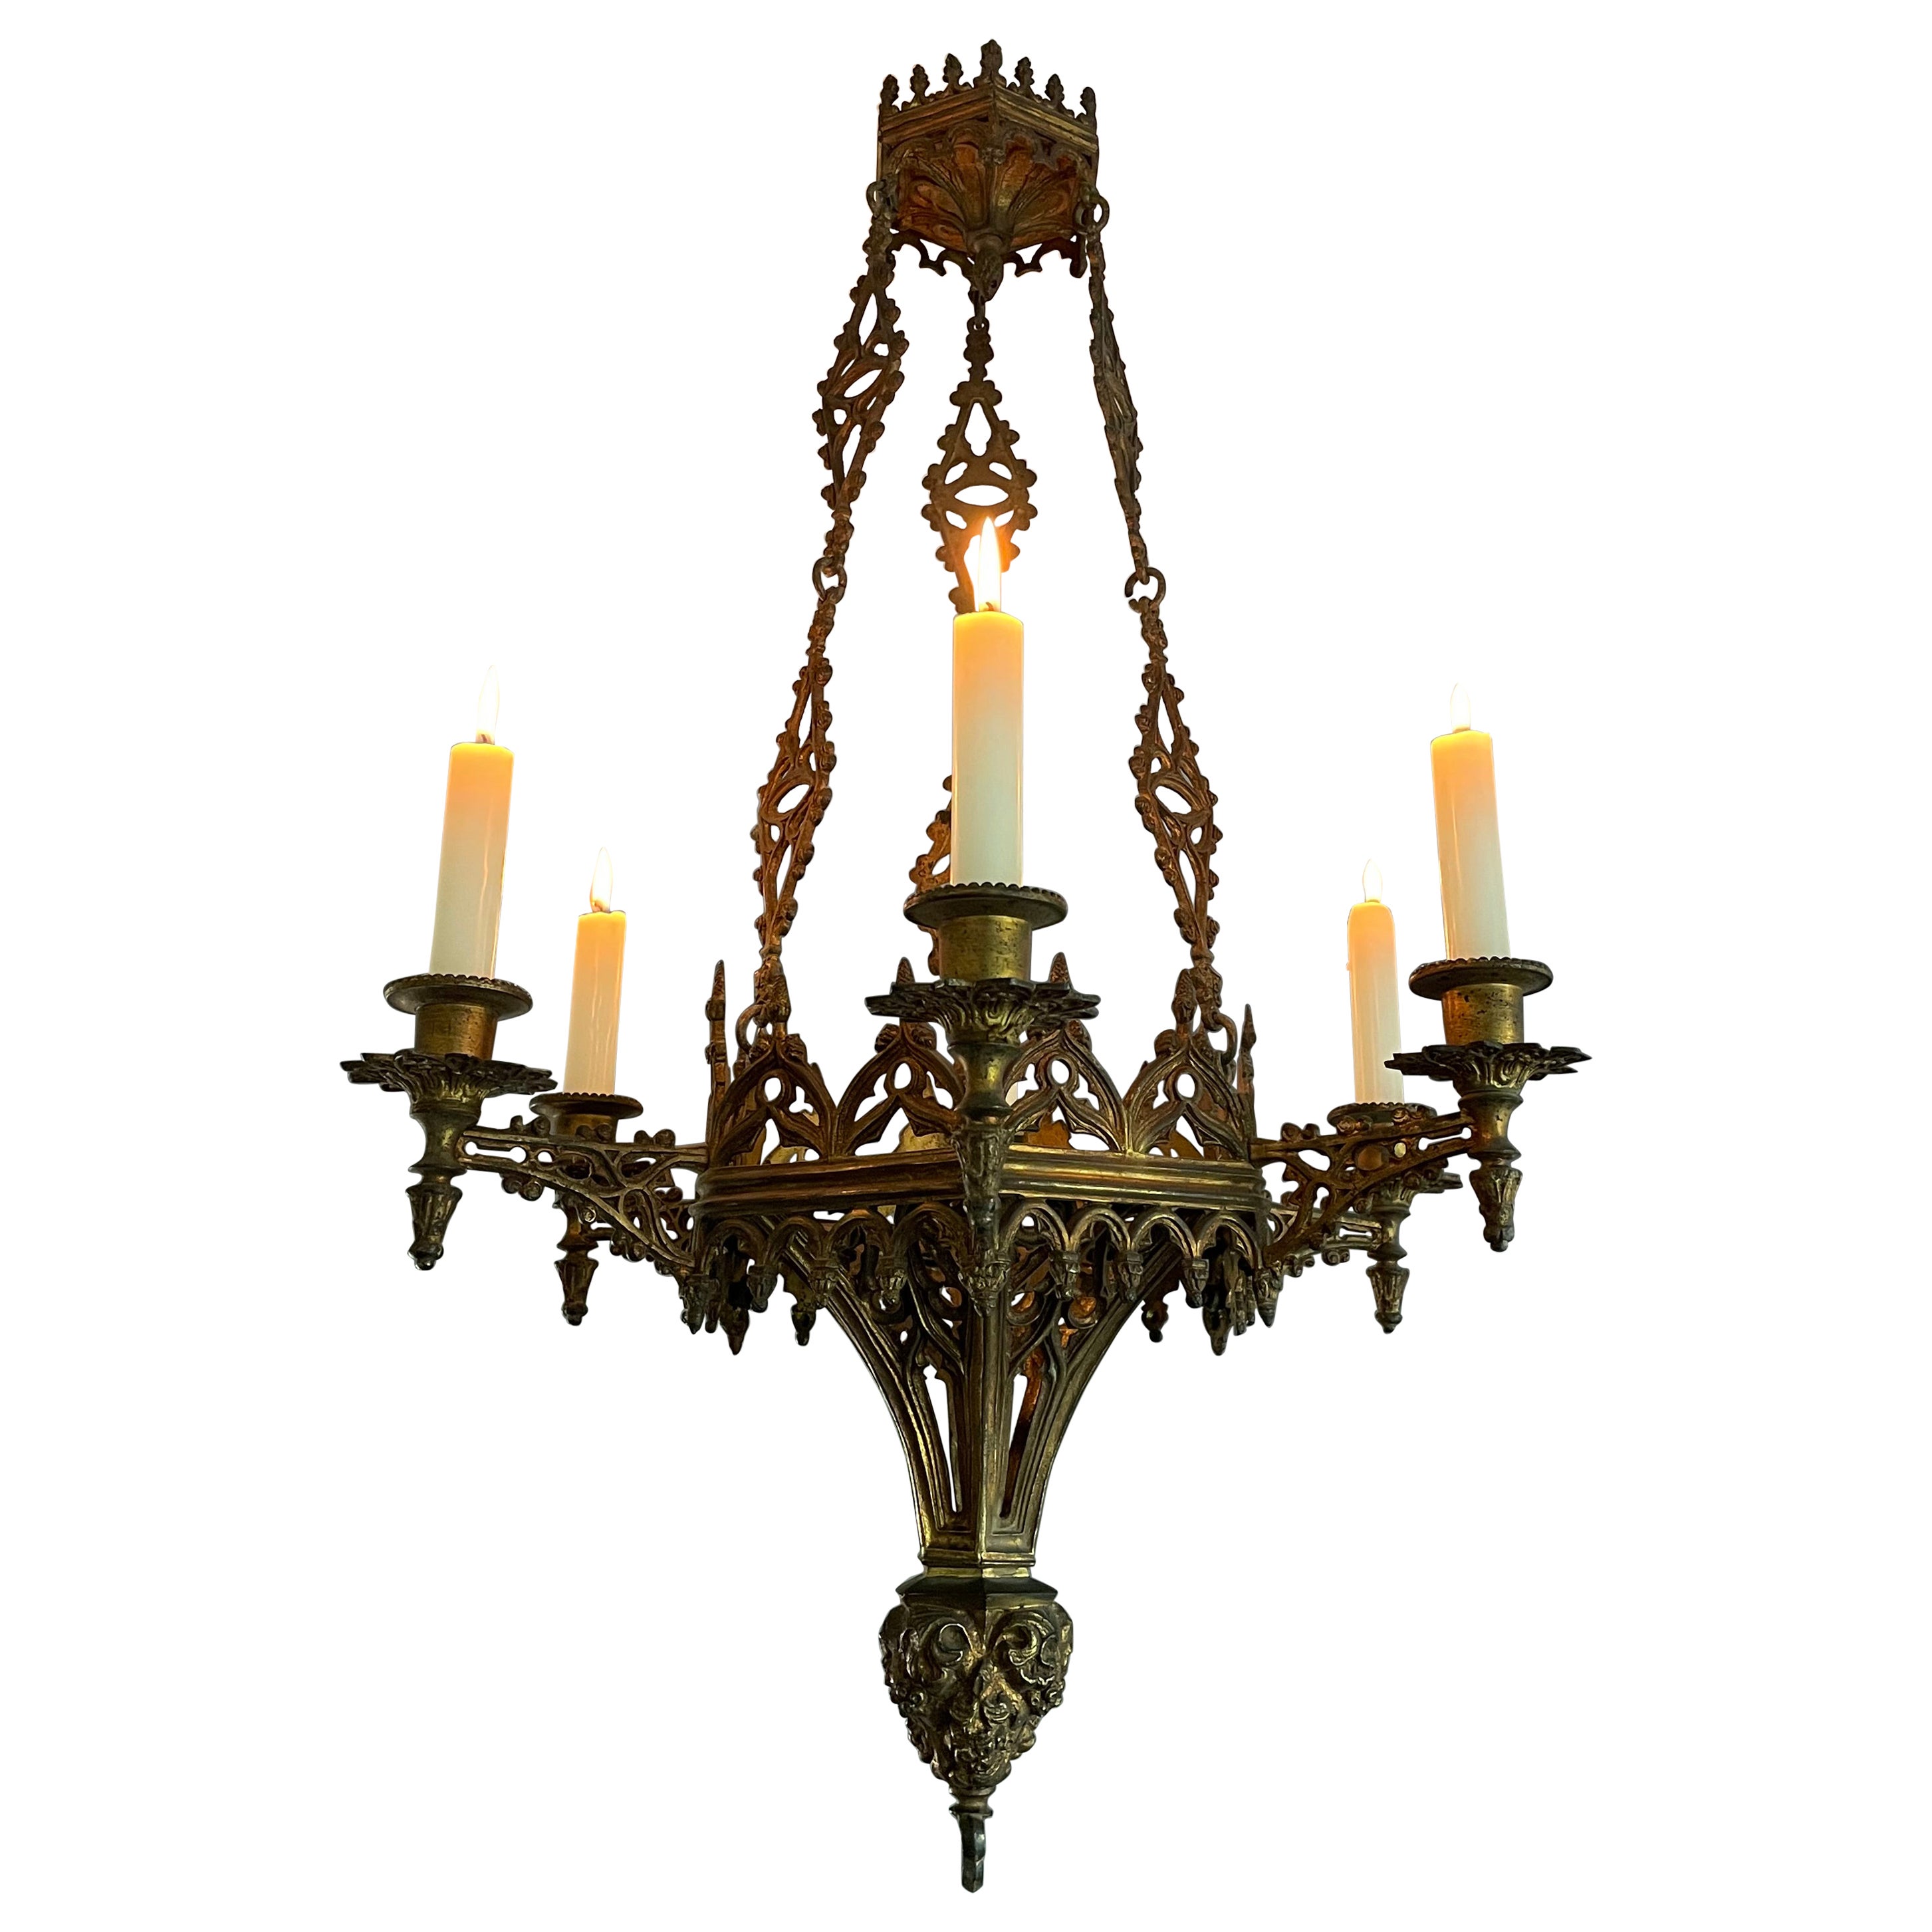 19th Century Antique Gothic Revival, Gilt Bronze Six Candle Church Chandelier